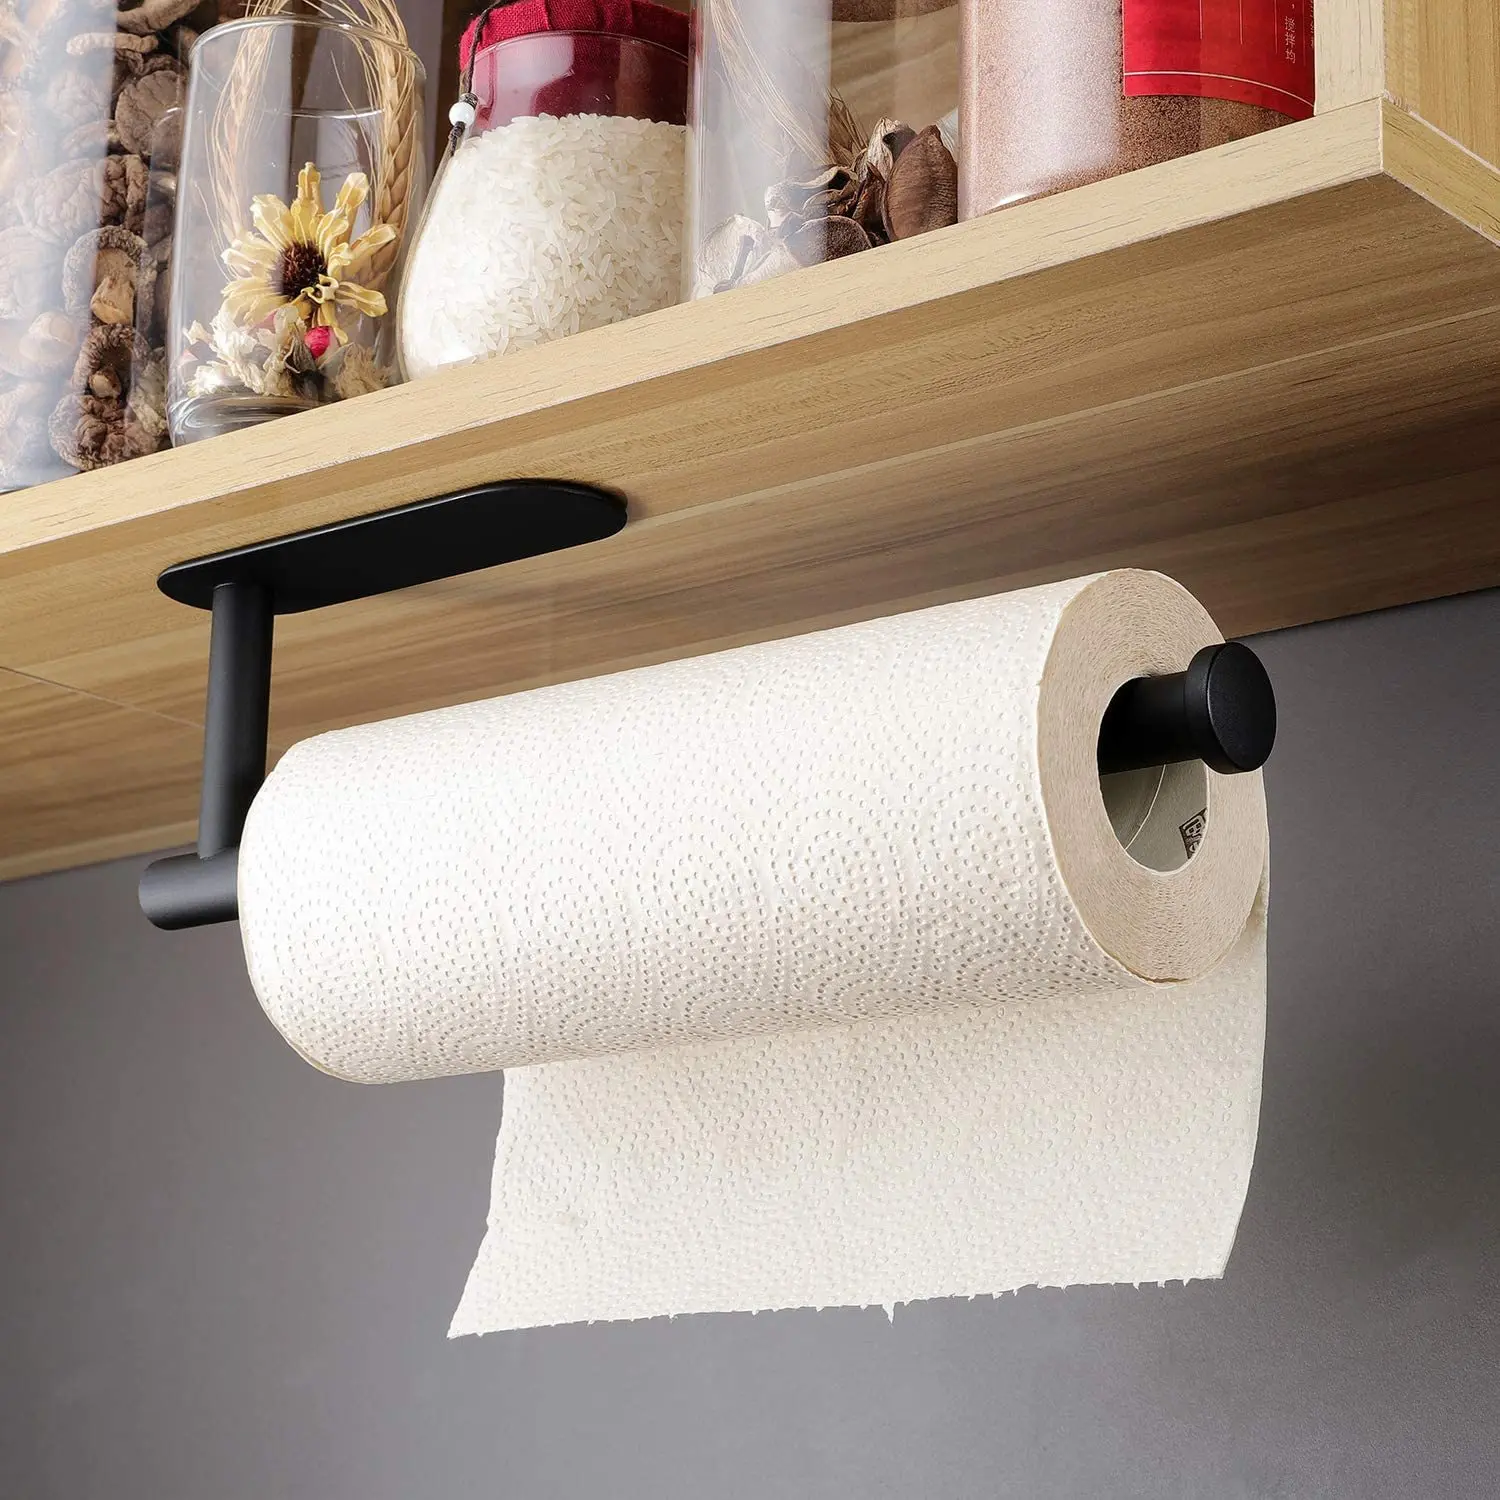 Adhesive Paper Towel Holder For Kitchen Napkin Rack Toilet Paper Holder Tissue Dispenser Cabinet Storage Bathroom Accessories